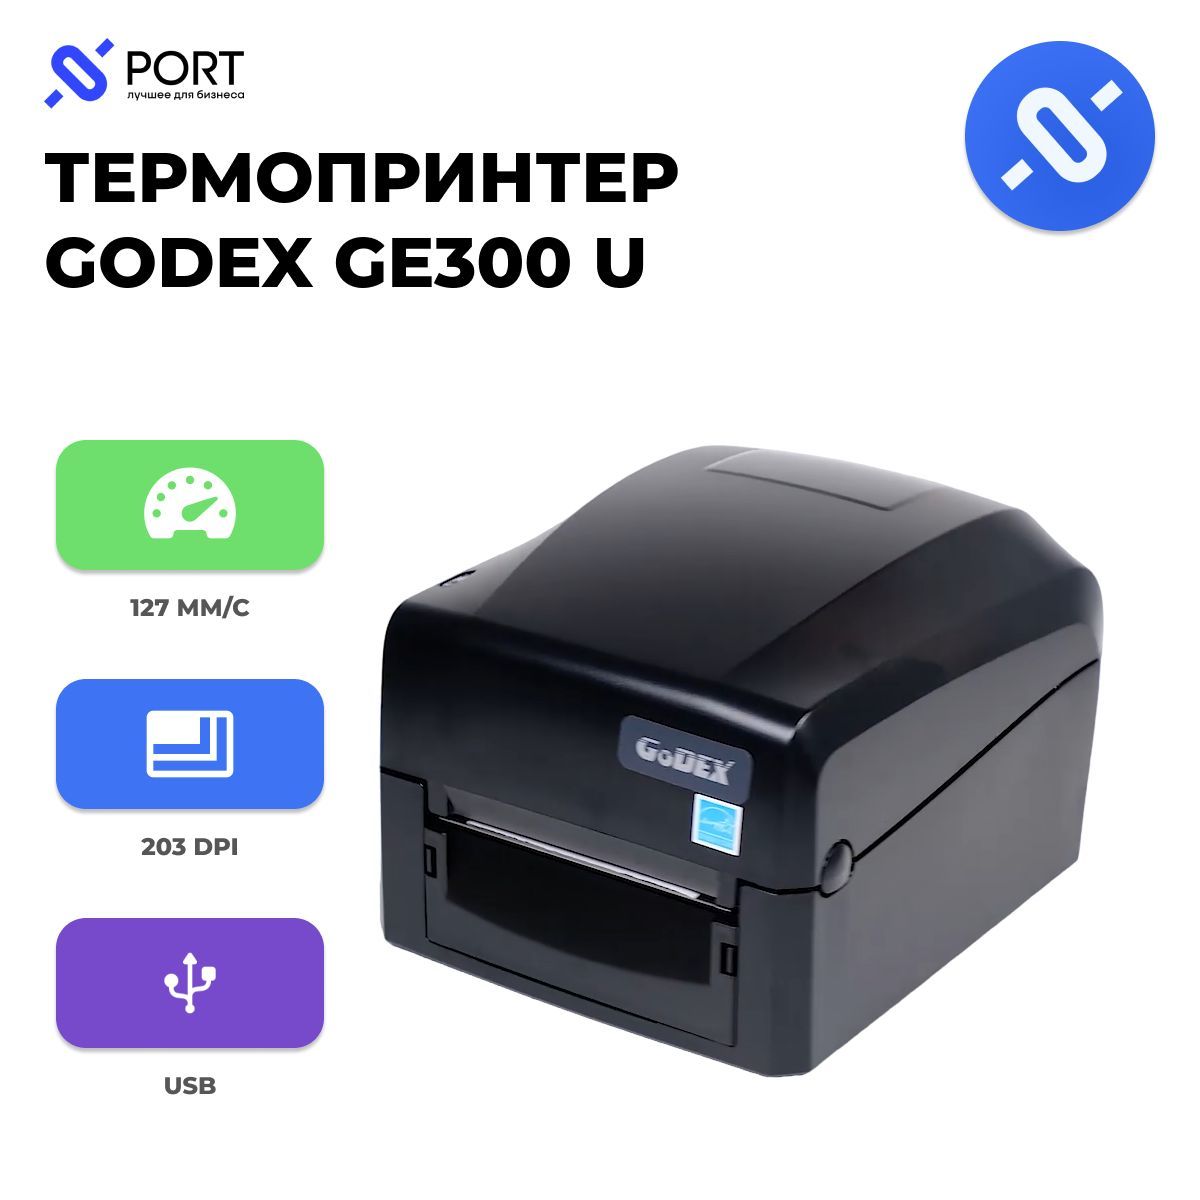 Godex Ge300